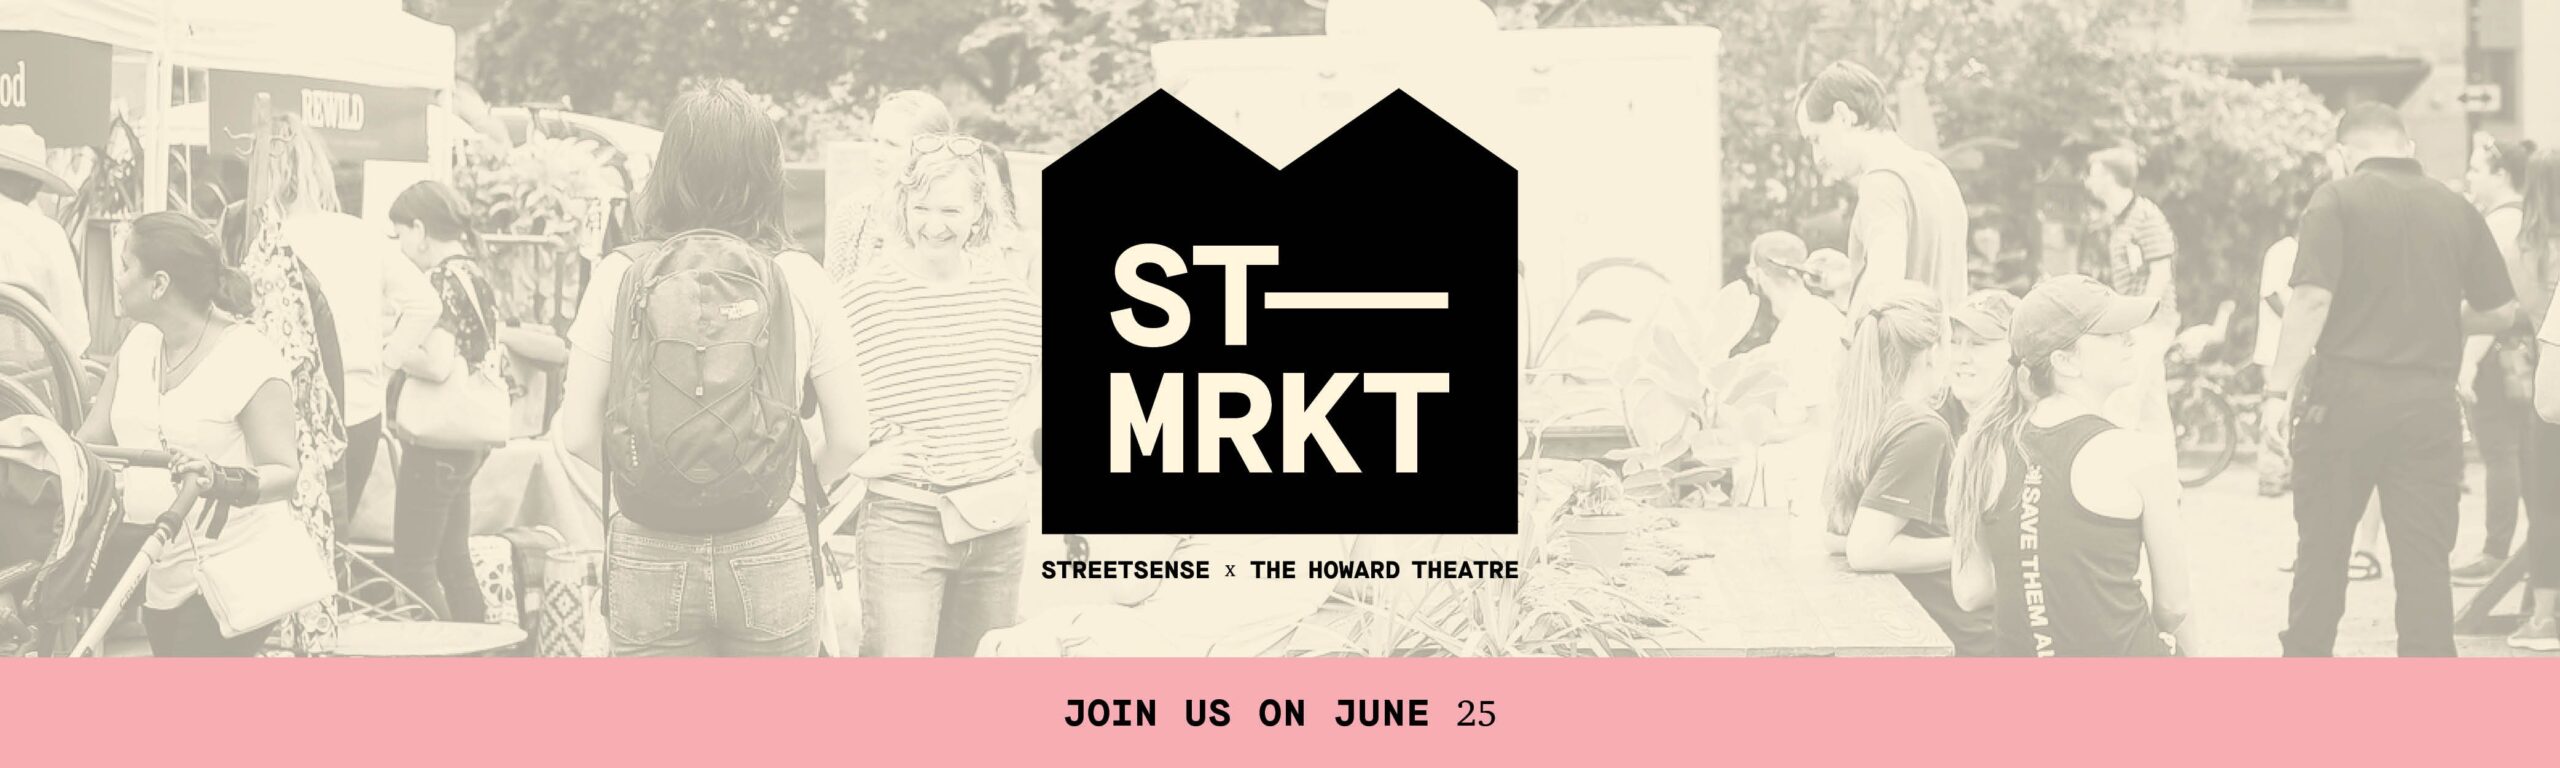 Streetmarket "ST--MRKT Streetsense x Howard Theatre Join us on June 25" Advertisement